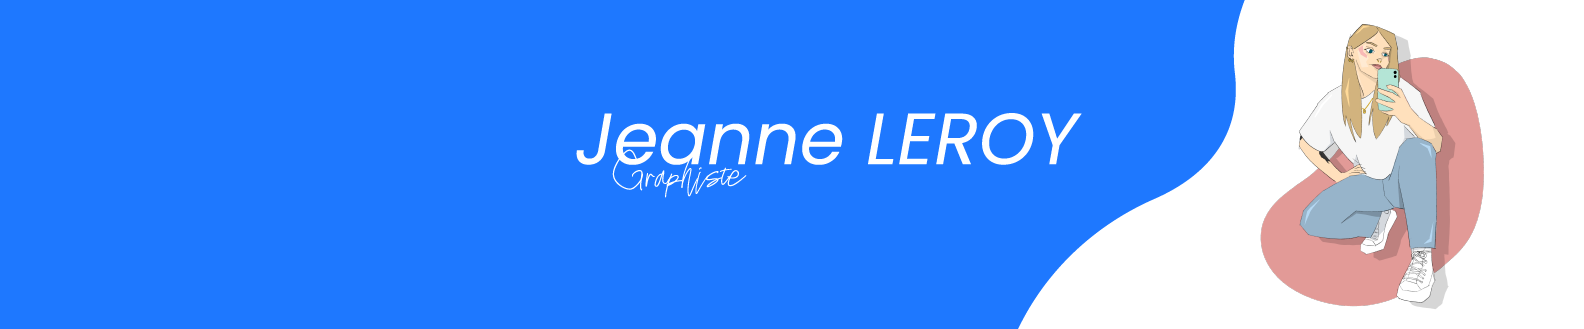 Jeanne LEROY's profile banner